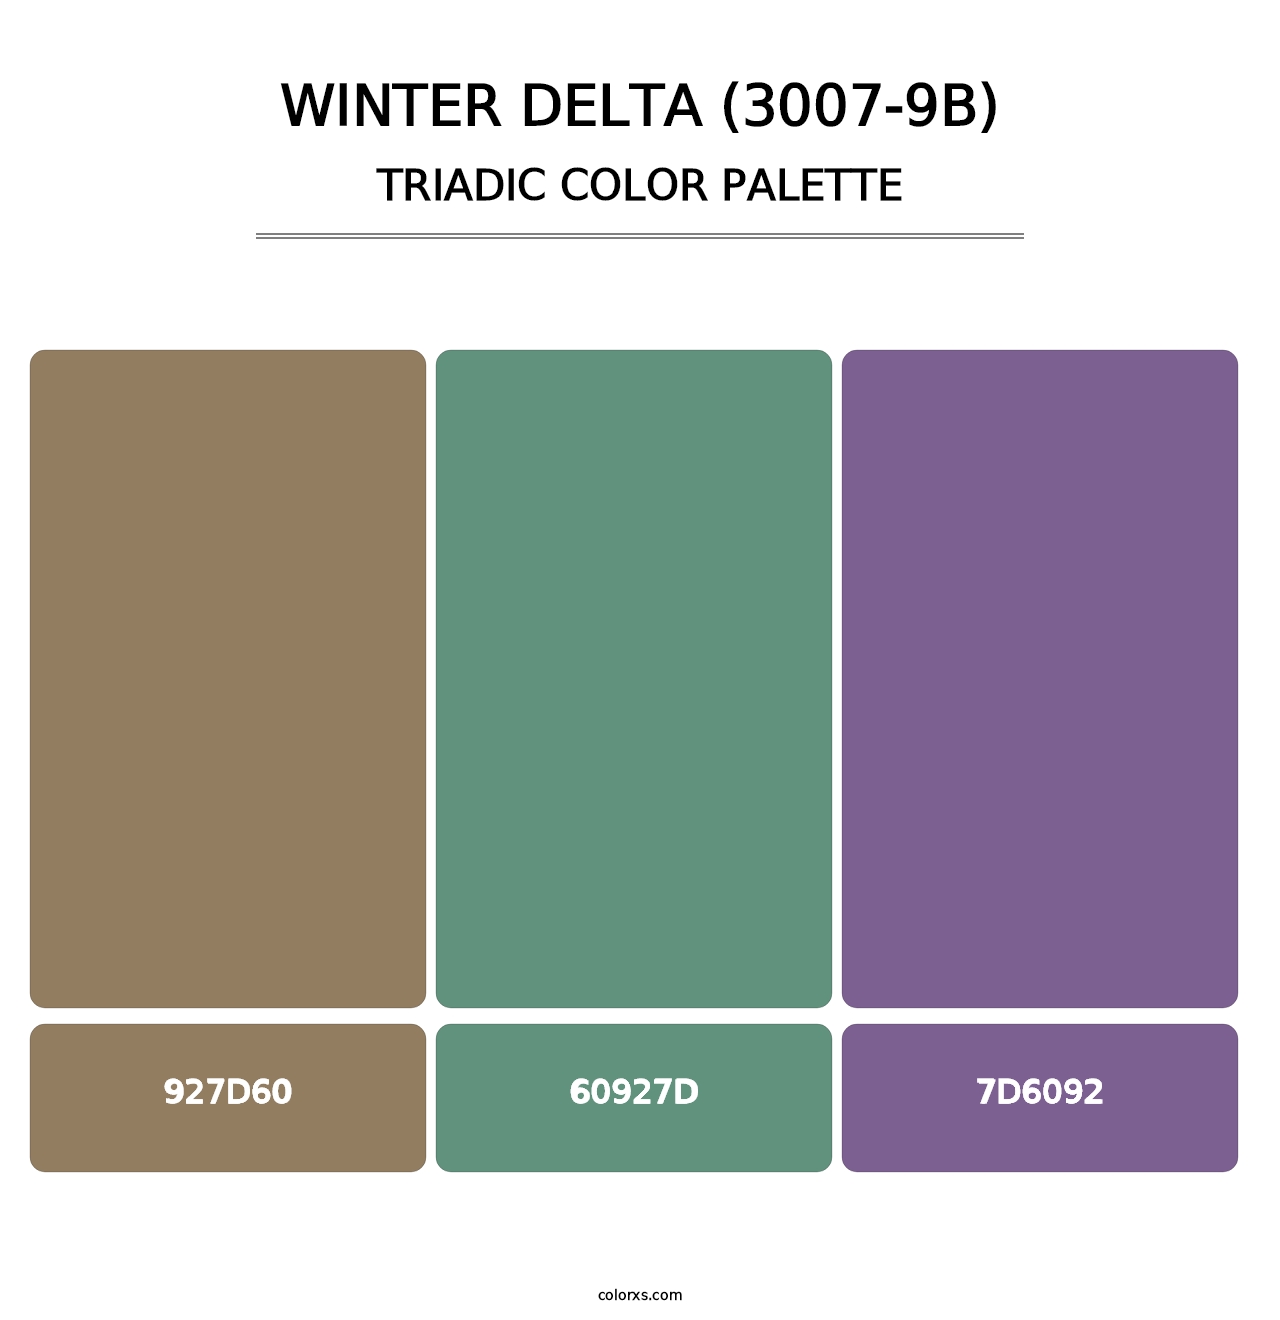 Winter Delta (3007-9B) - Triadic Color Palette